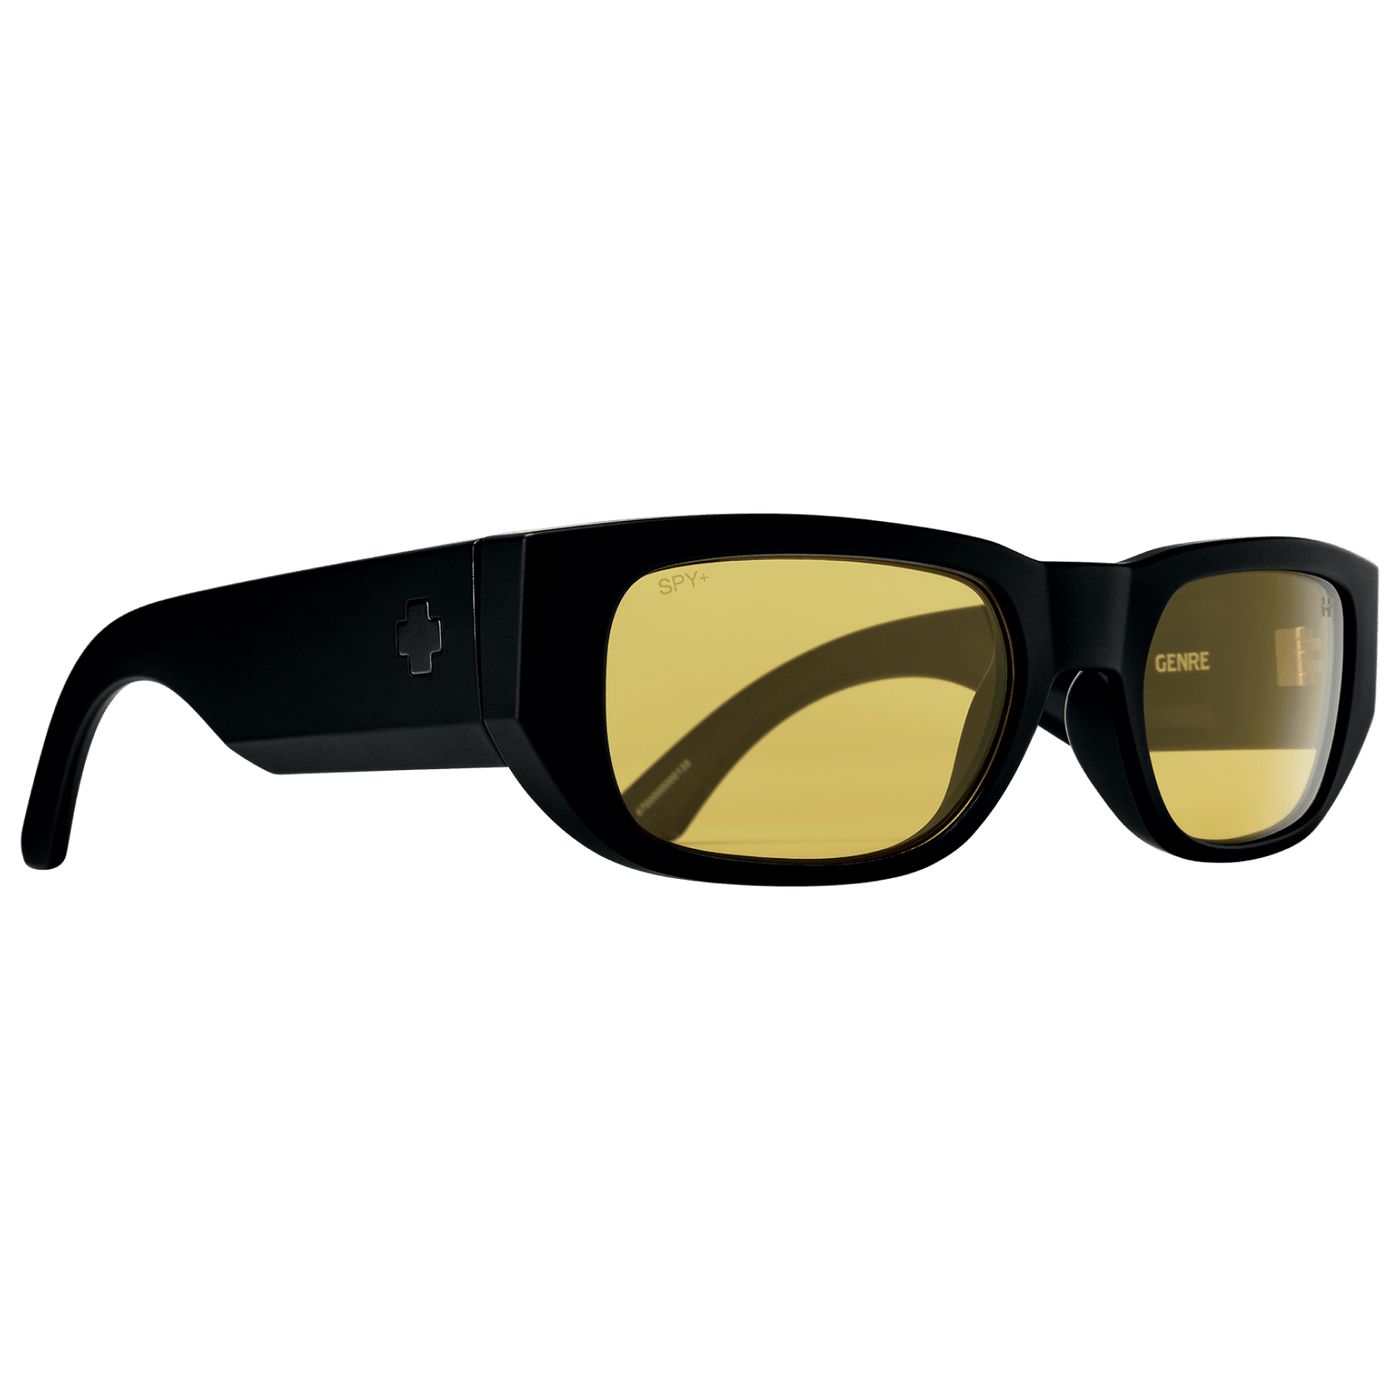 SPY GENRE Sunglasses, Happy Lens - Yellow 8Lines Shop - Fast Shipping